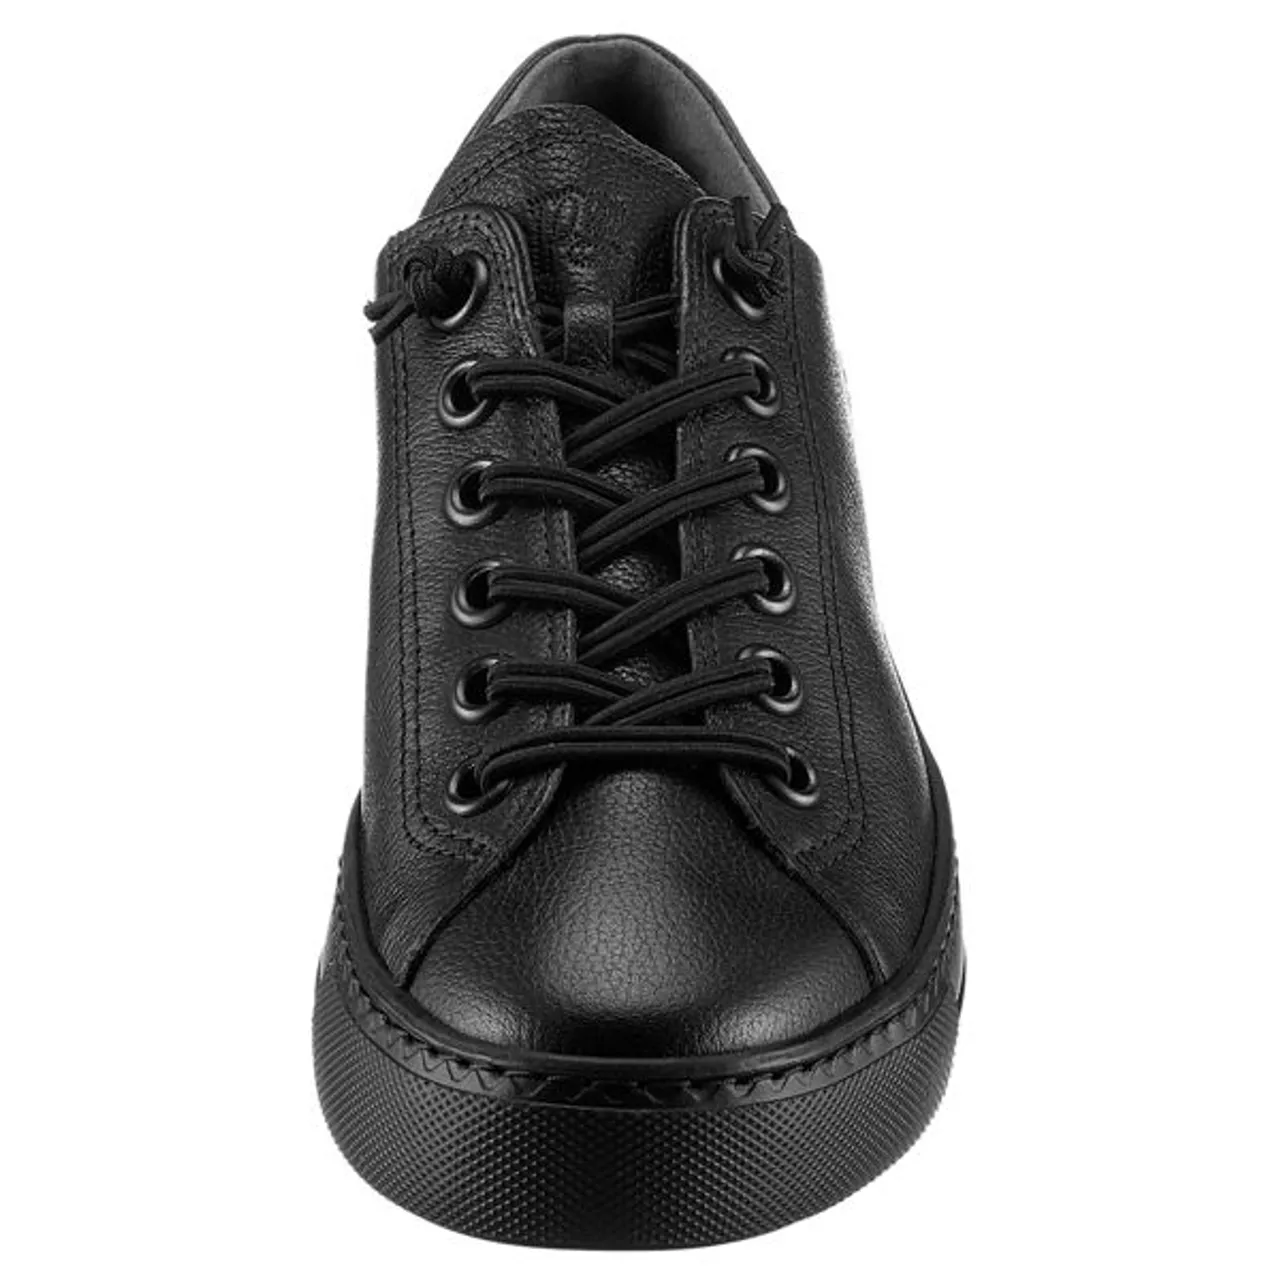 Slip-On Sneaker PAUL GREEN Gr. 37,5, schwarz Damen Schuhe Sneaker Plateau Sneaker, Slipper, Freizeitschuh mit Gummizug